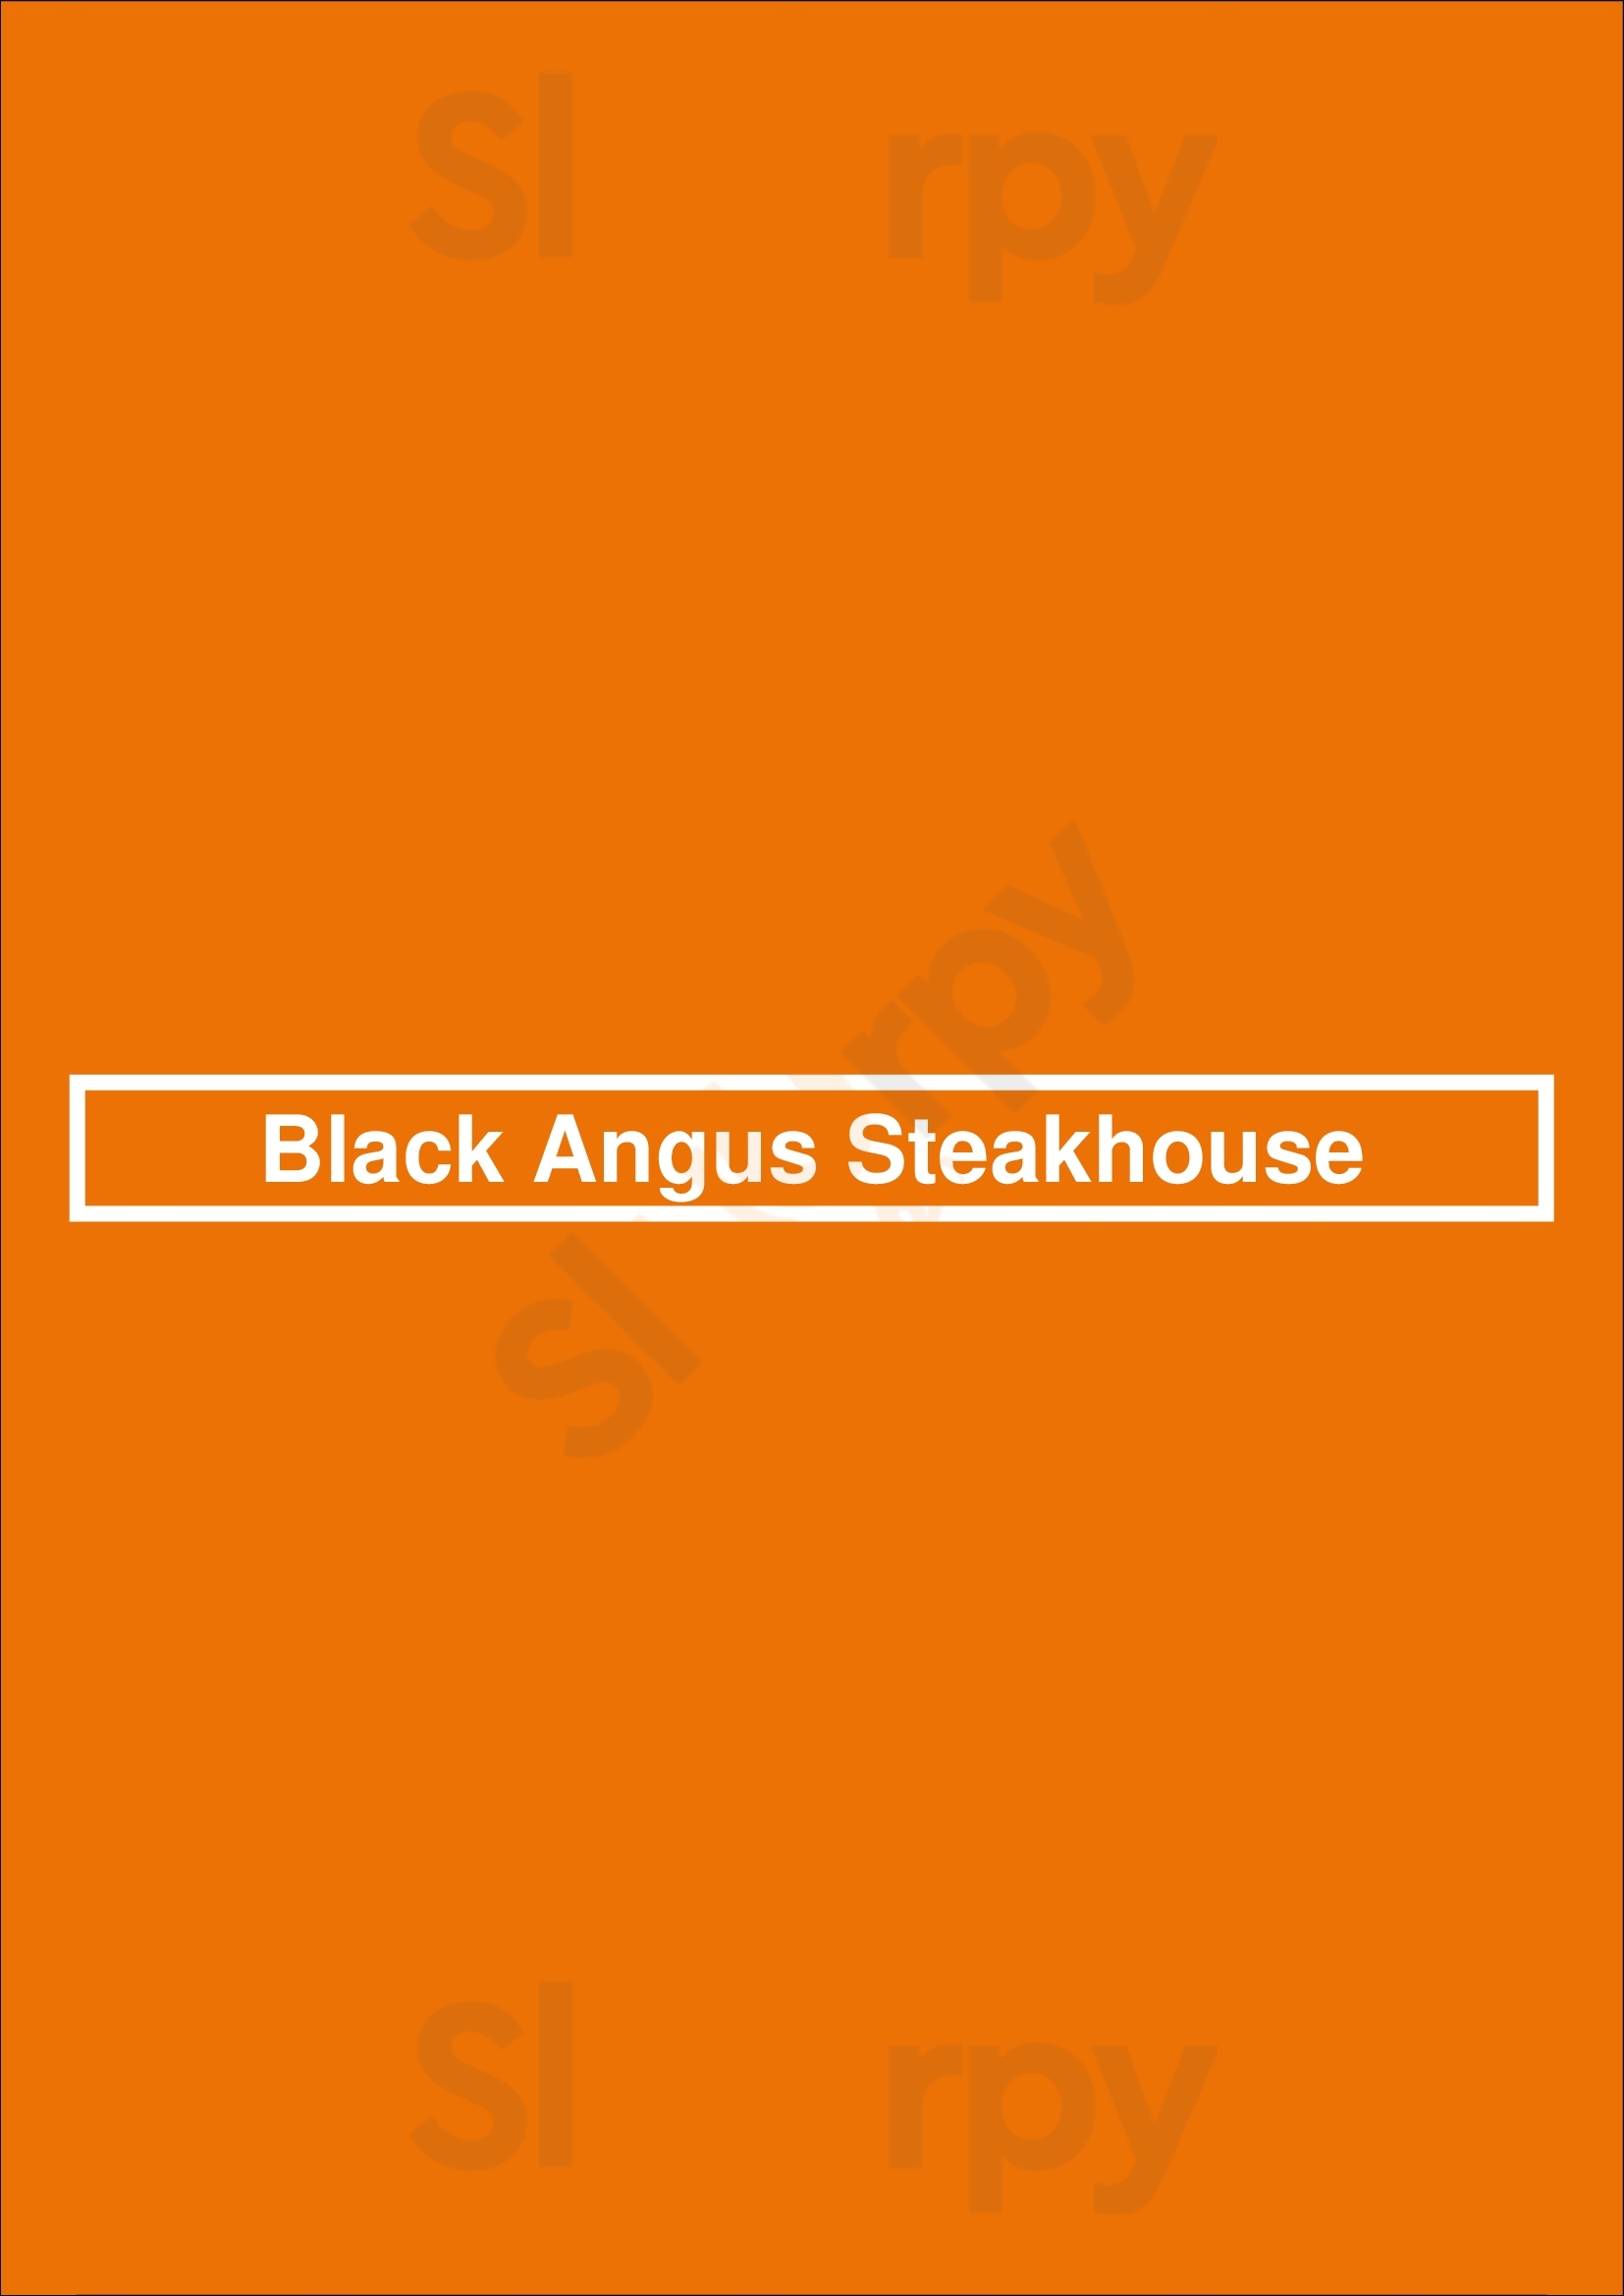 Black Angus Steakhouse Toronto Menu - 1